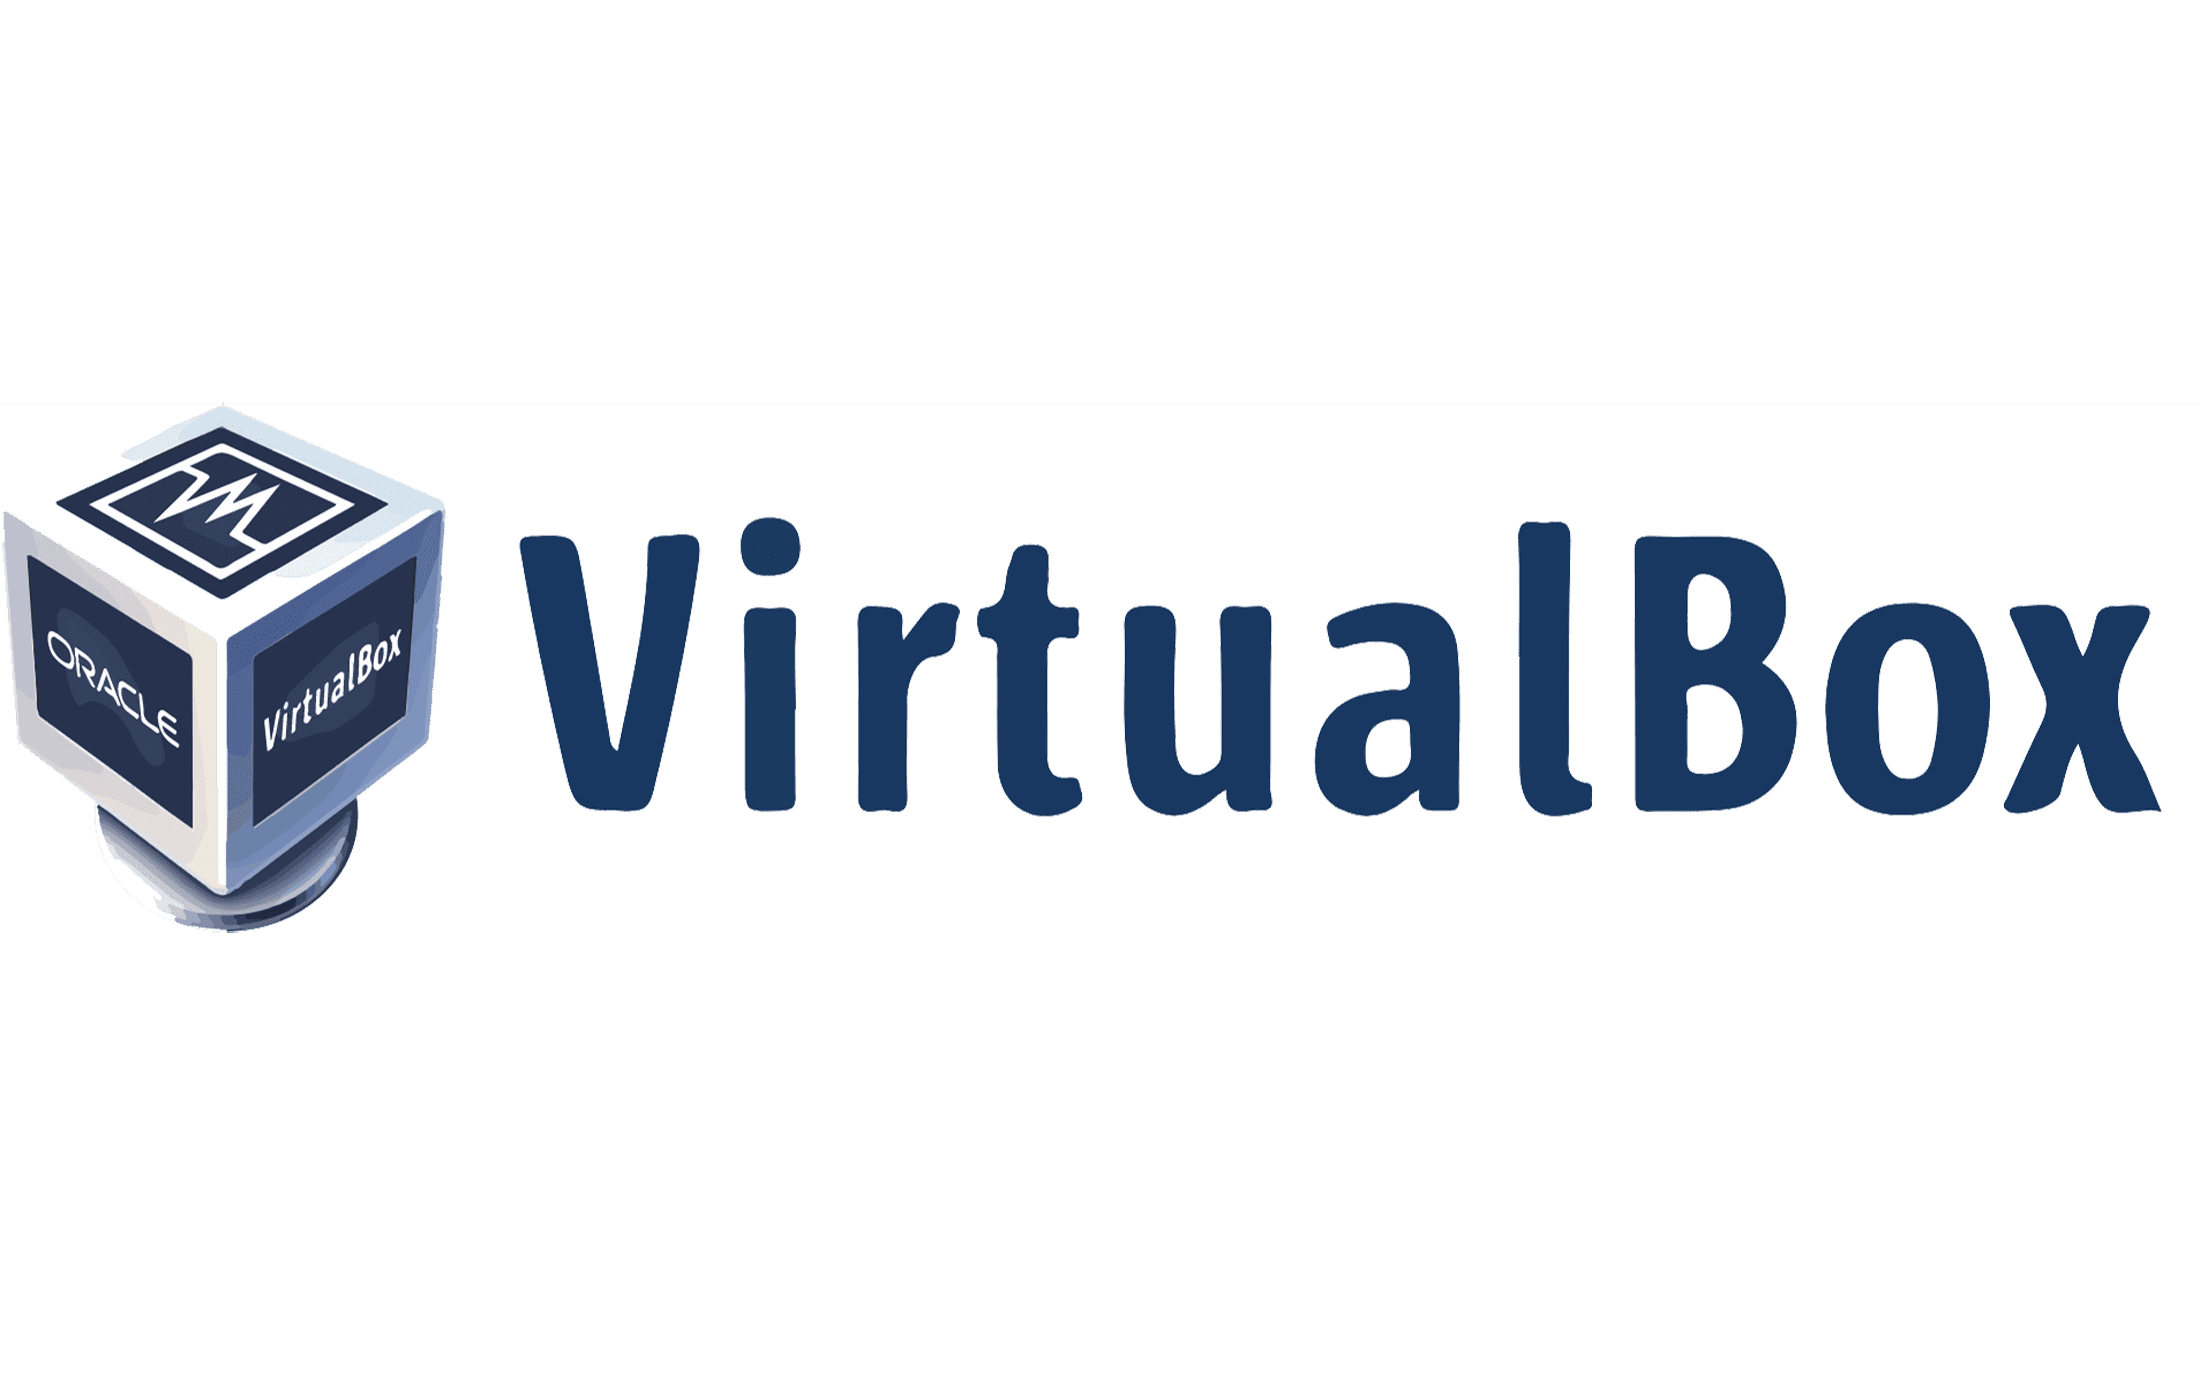 Https virtualbox org. Виртуальная машина VIRTUALBOX. Логотип VIRTUALBOX. Значок виртуал бокс. Oracle VIRTUALBOX логотип.